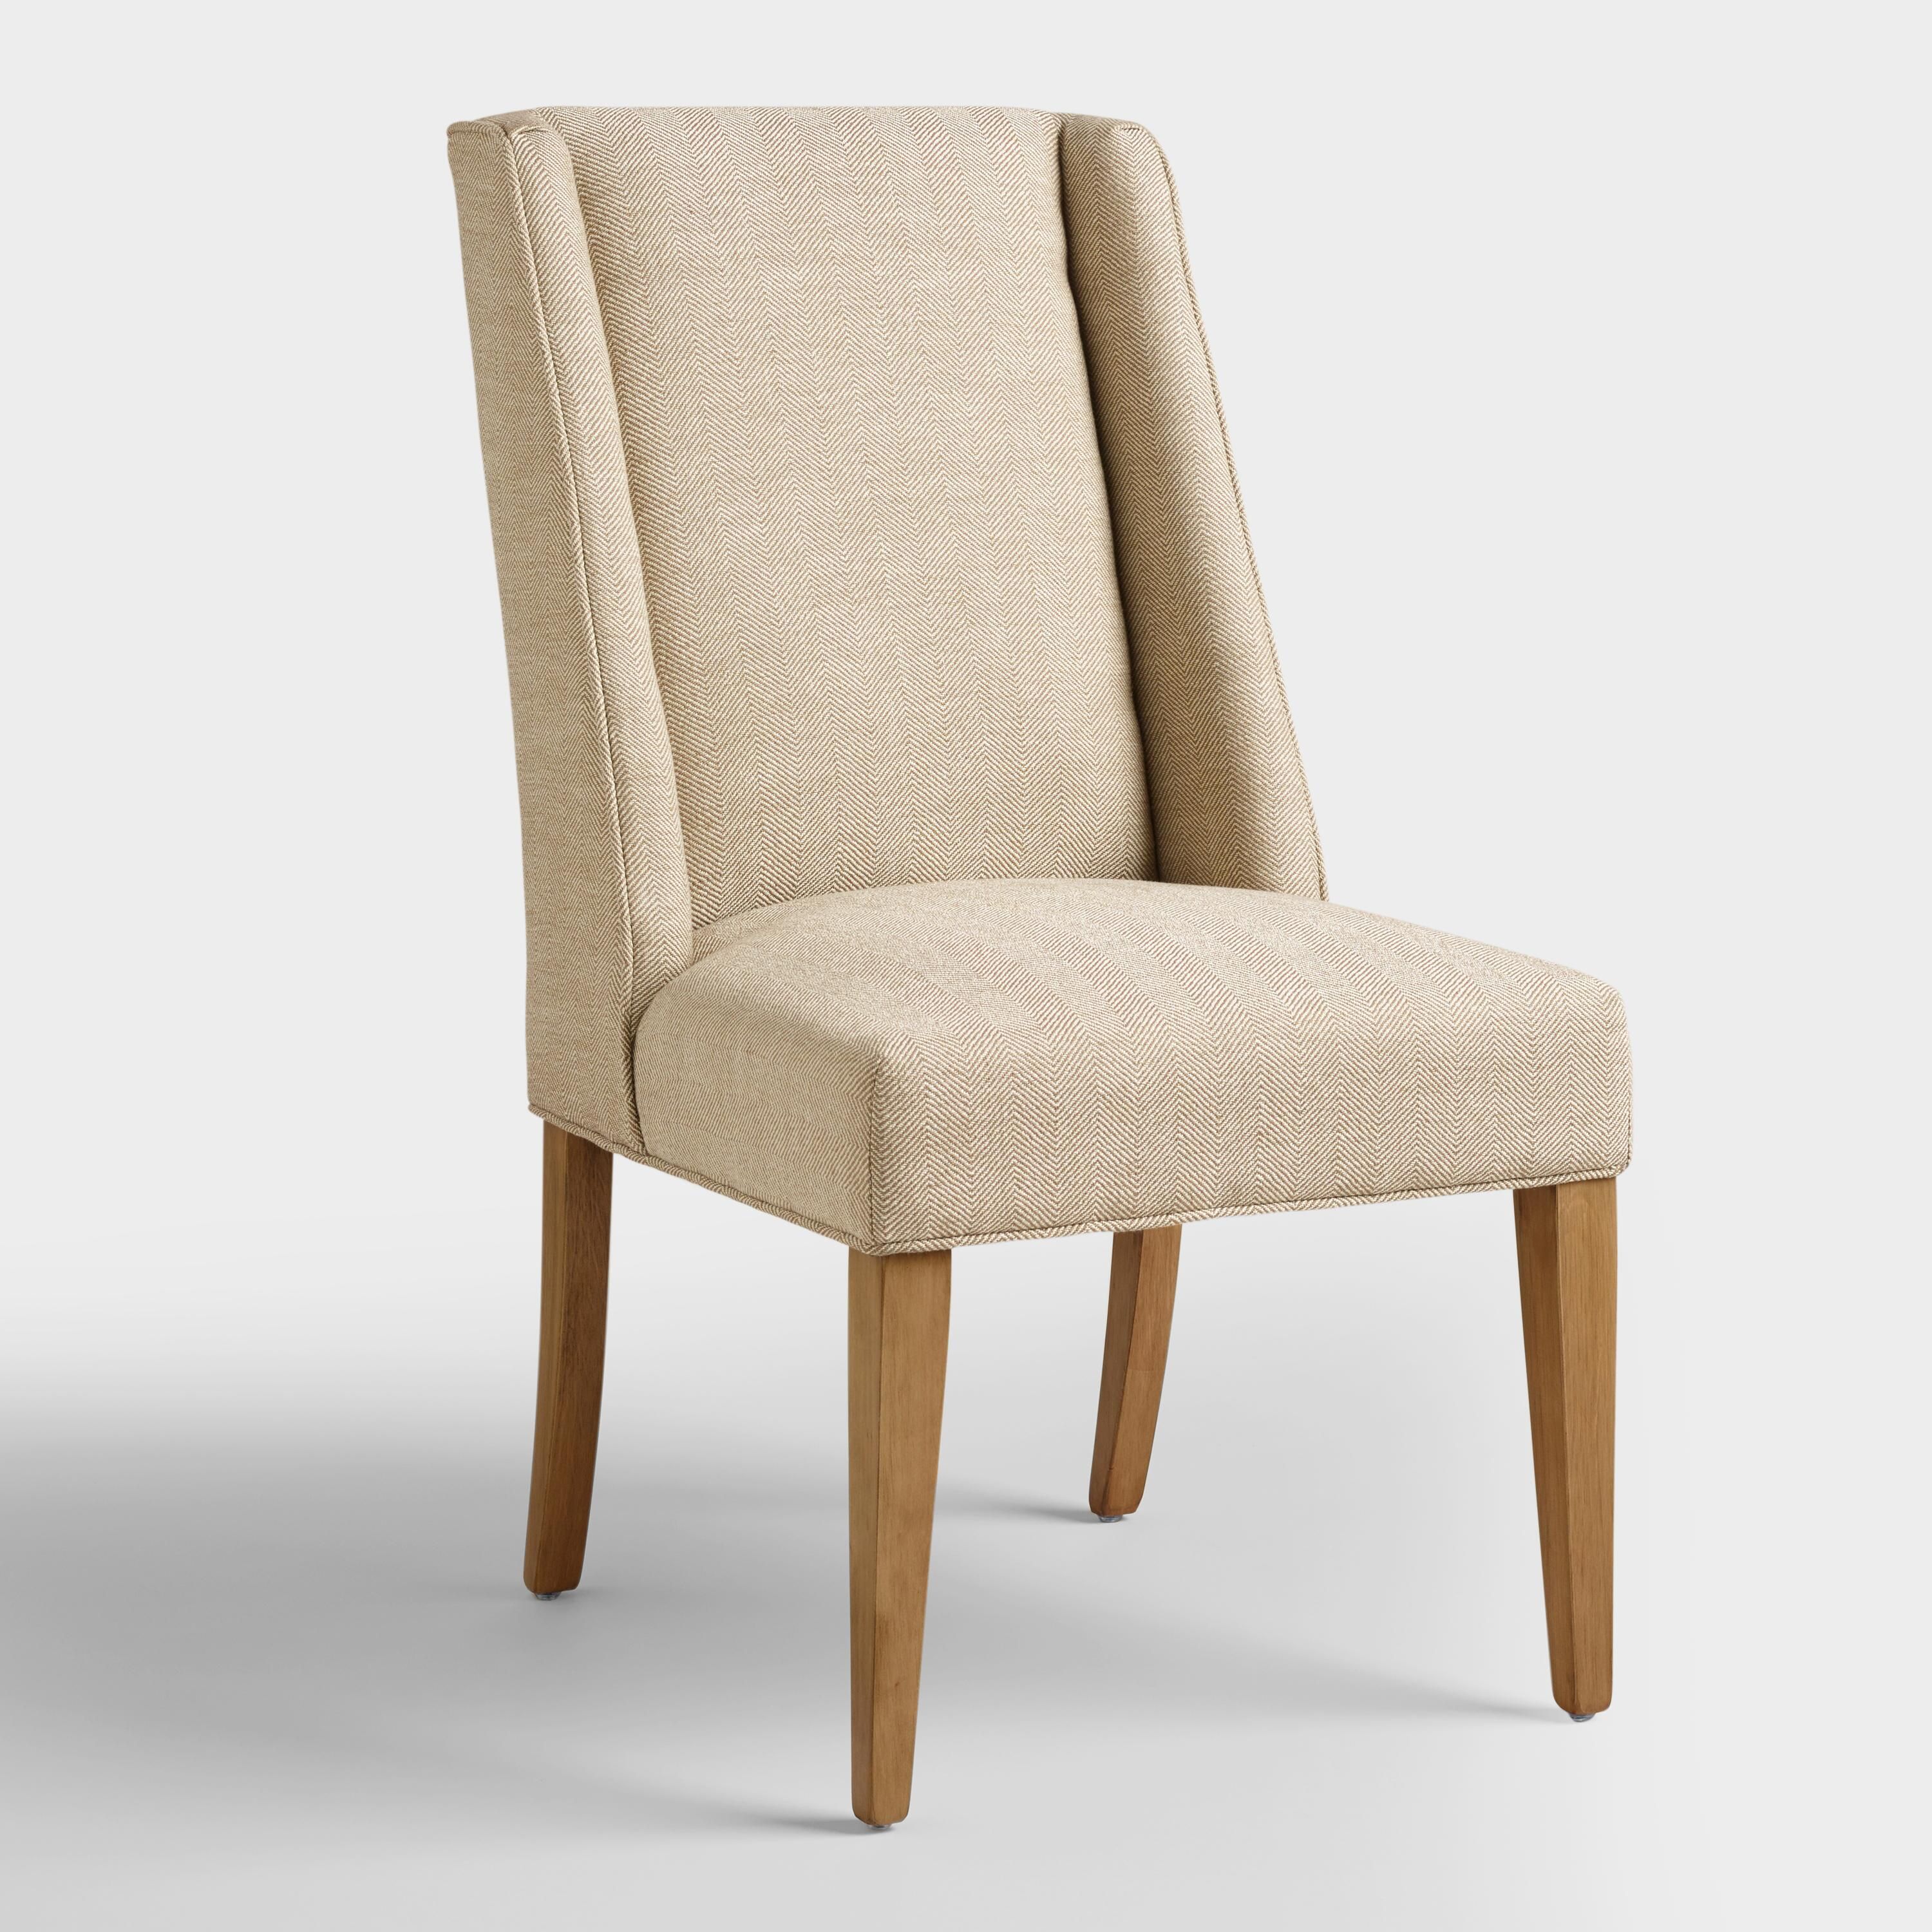 Khaki Herringbone Lawford Dining Chairs | World Market